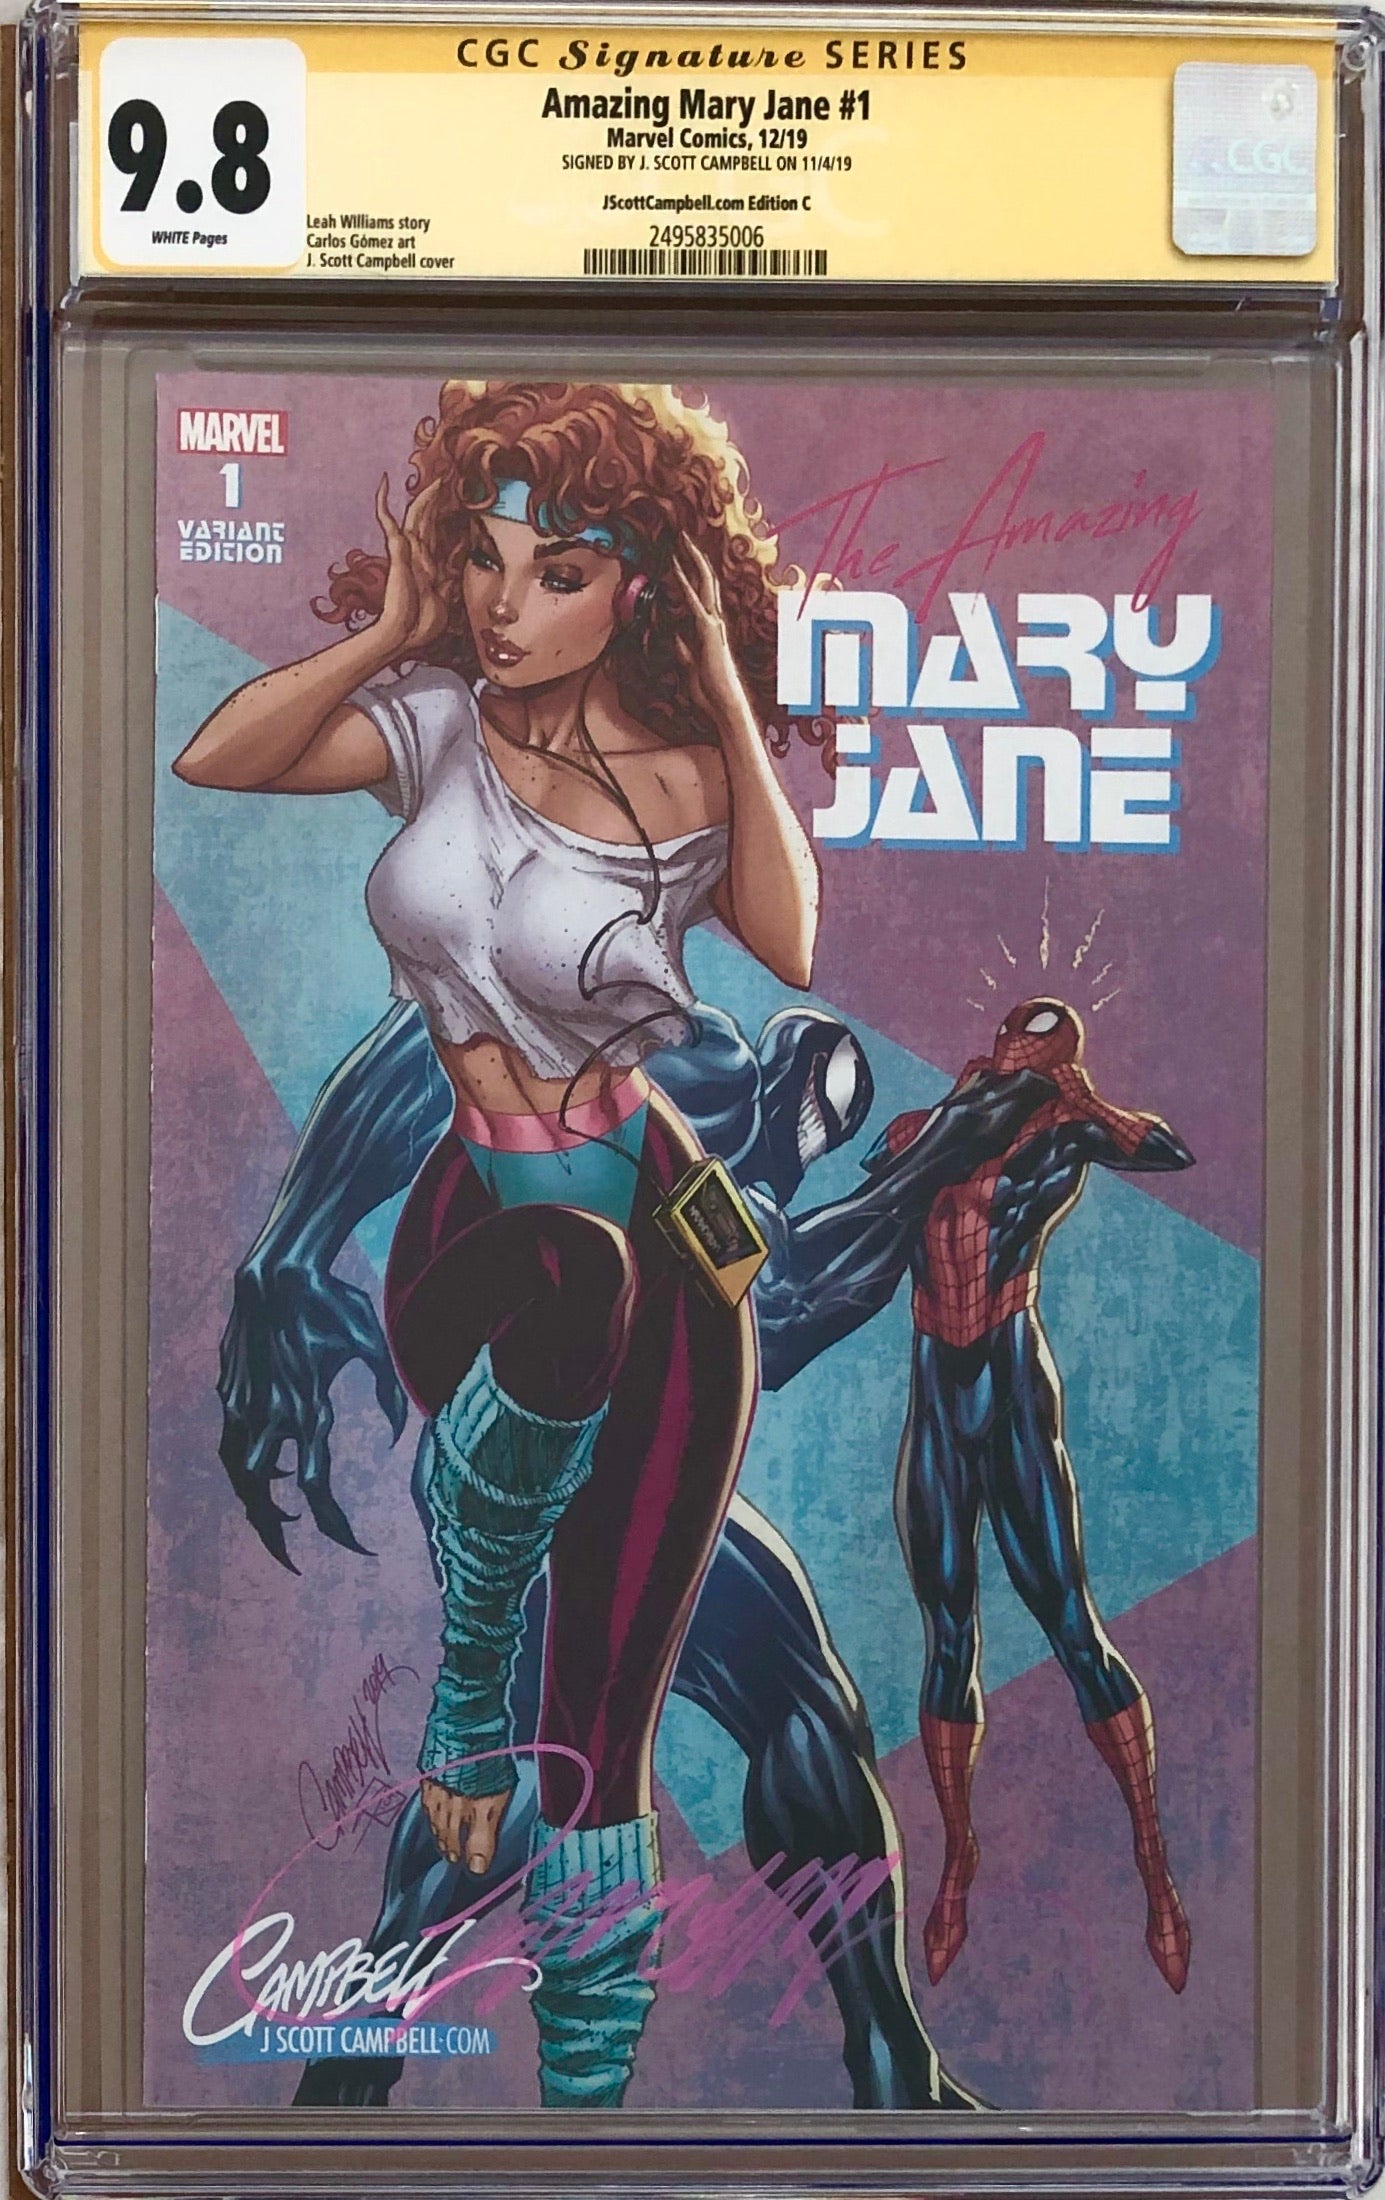 Amazing Mary Jane #1 J. Scott Campbell Exclusive C - "80s - Venom n' leg-warmers" CGC 9.8 SS